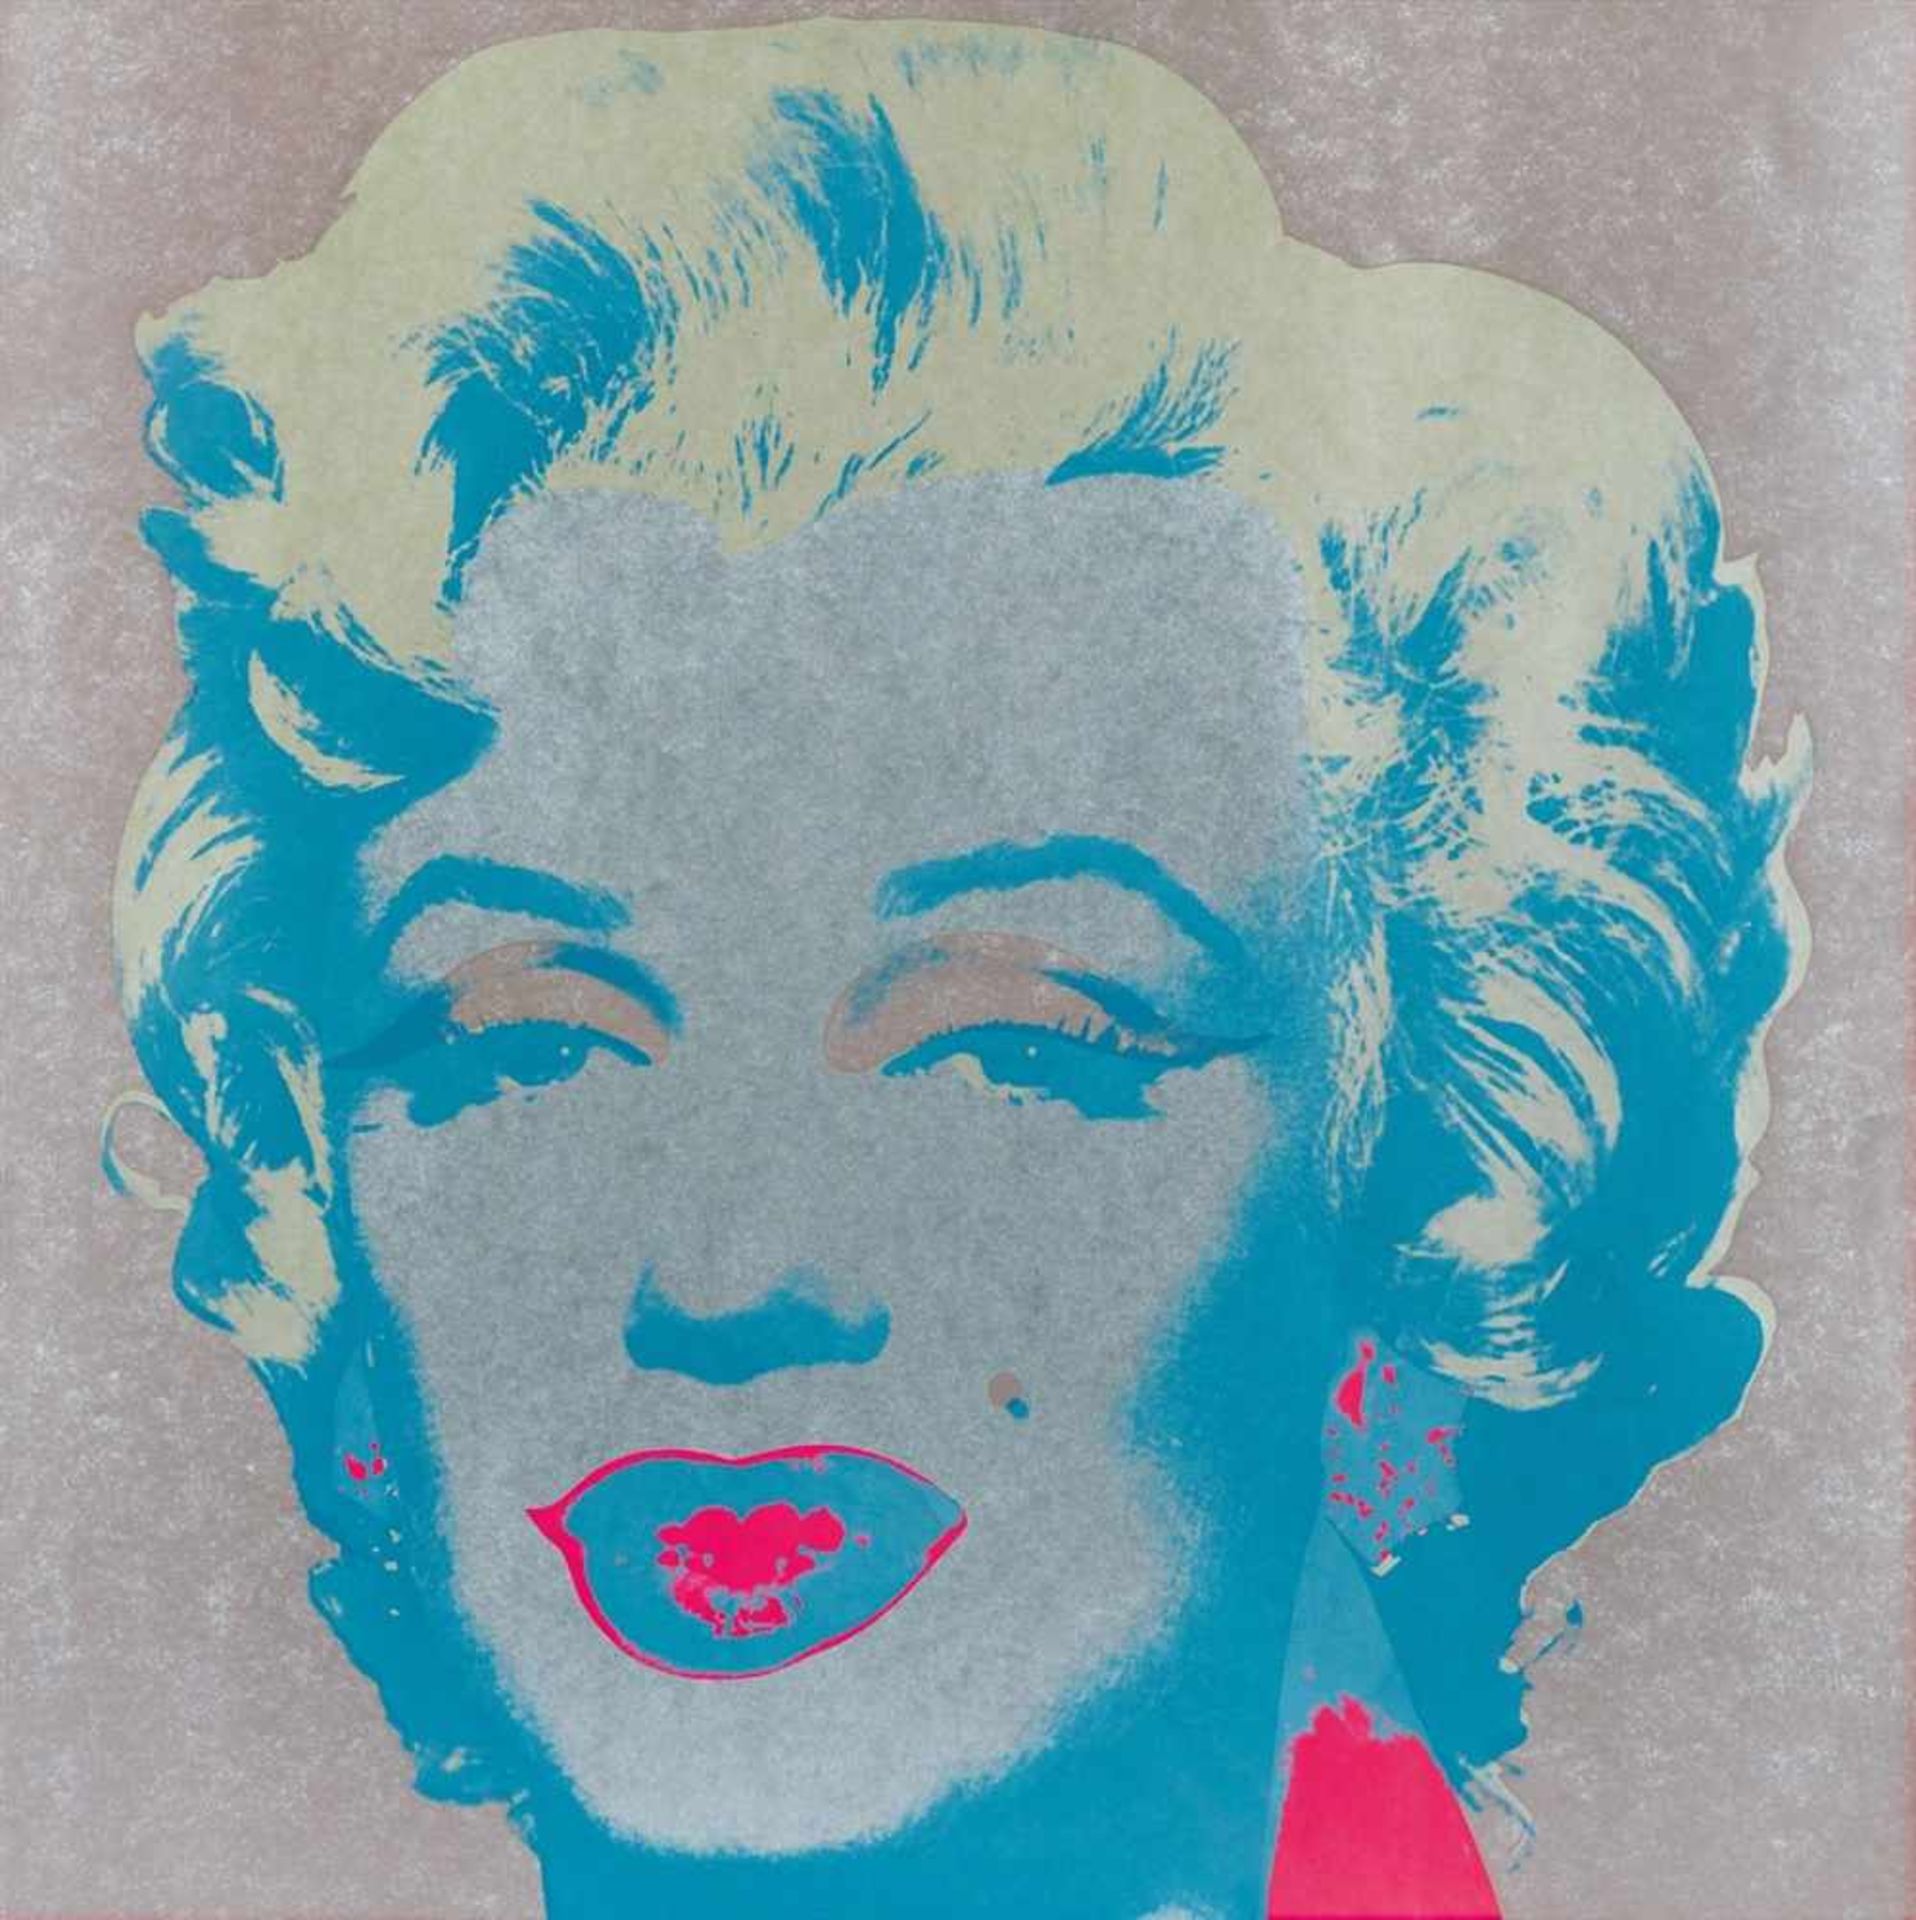 Andy WarholMarilyn Monroe (Marilyn) Farbserigraphie auf Karton. 91,4 x 91,4 cm. Unter Glas